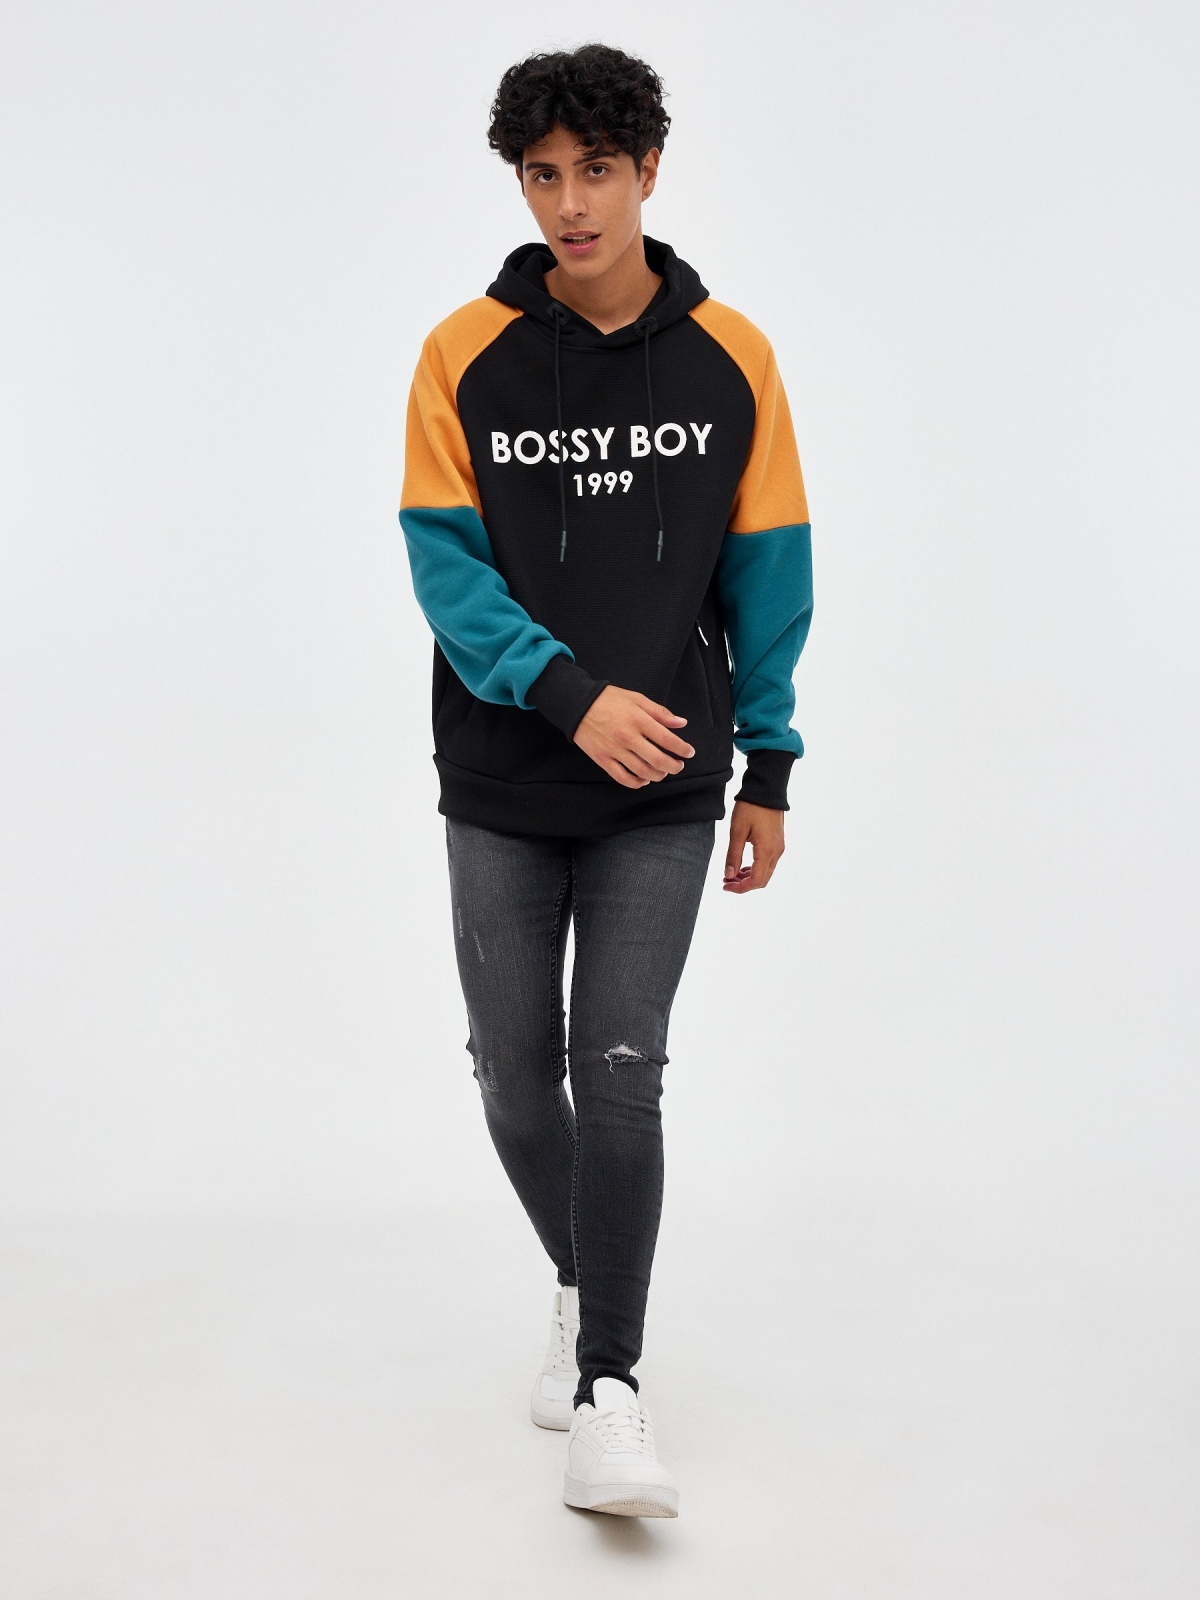 Bossy Boy Sweatshirt black front view